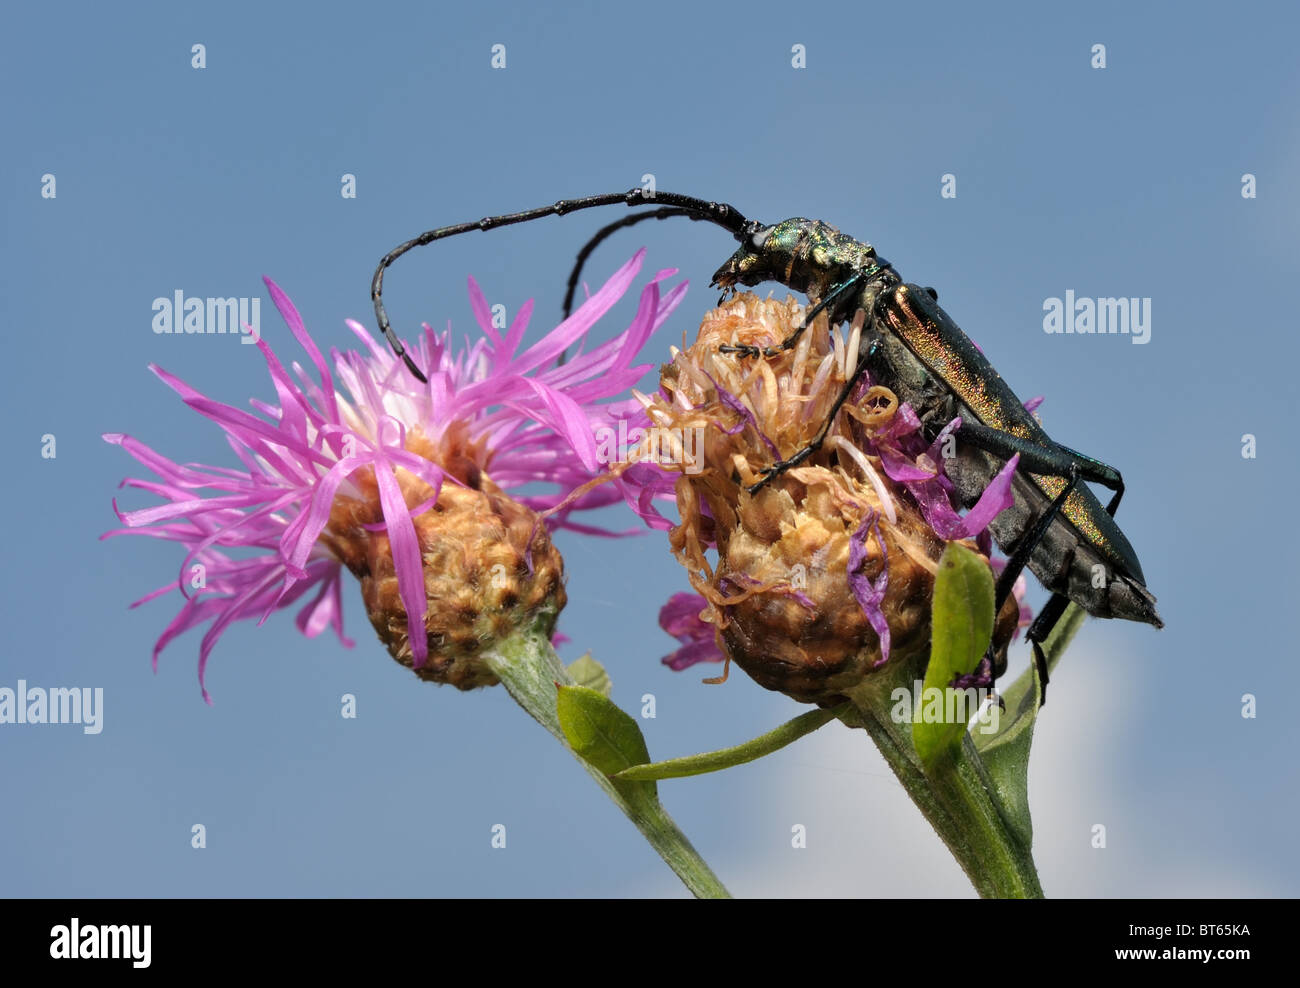 Longhorn beetle on a flower. Stock Photo